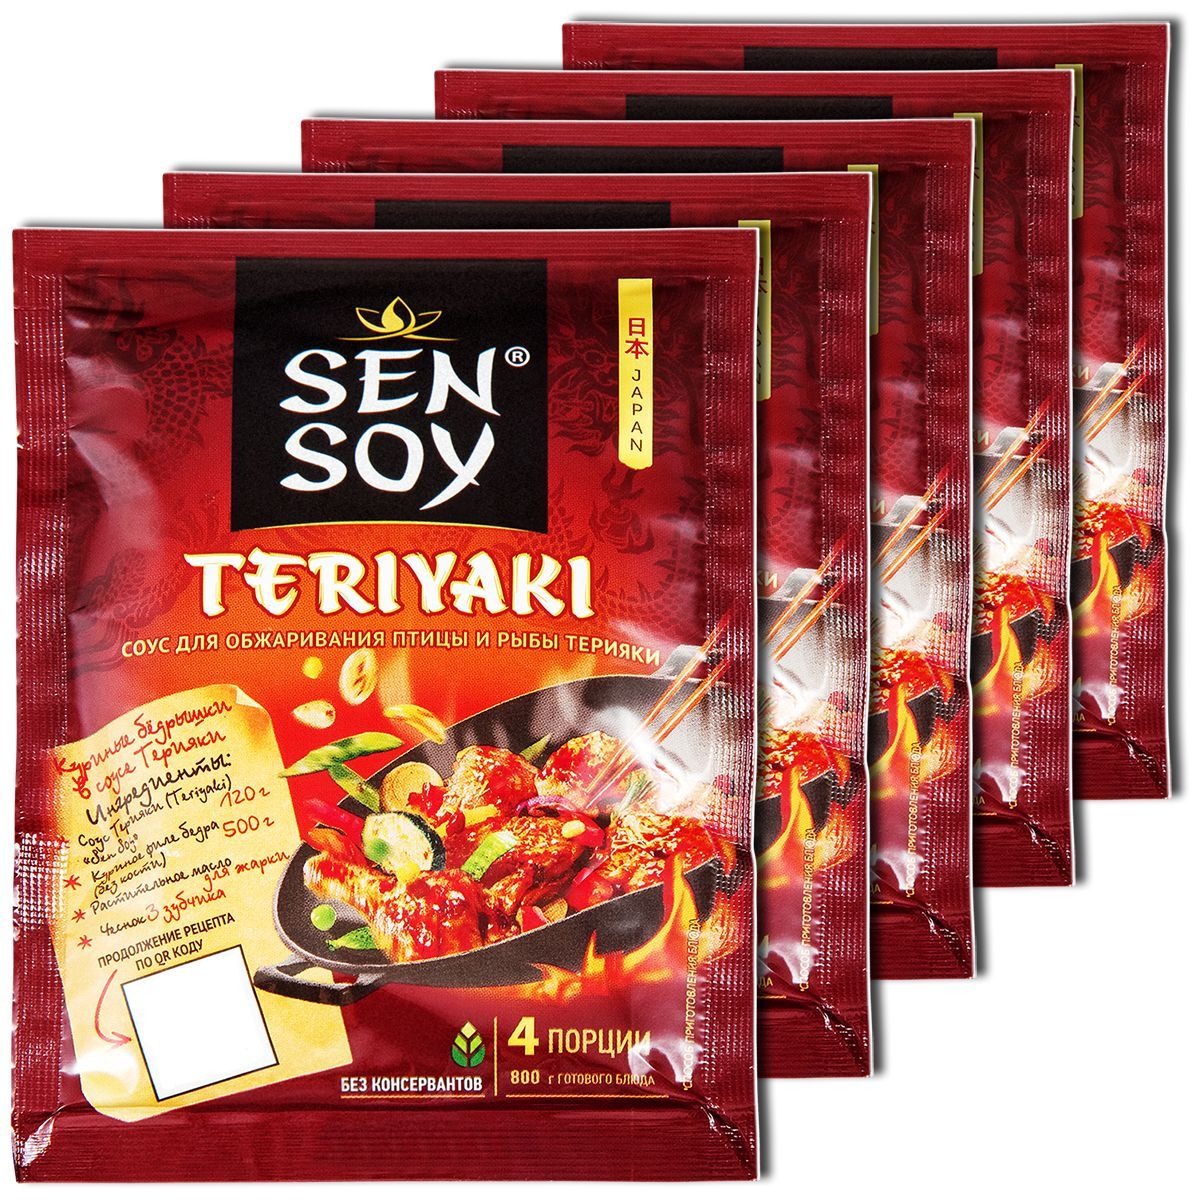 Sen soy набор для суши цена фото 95